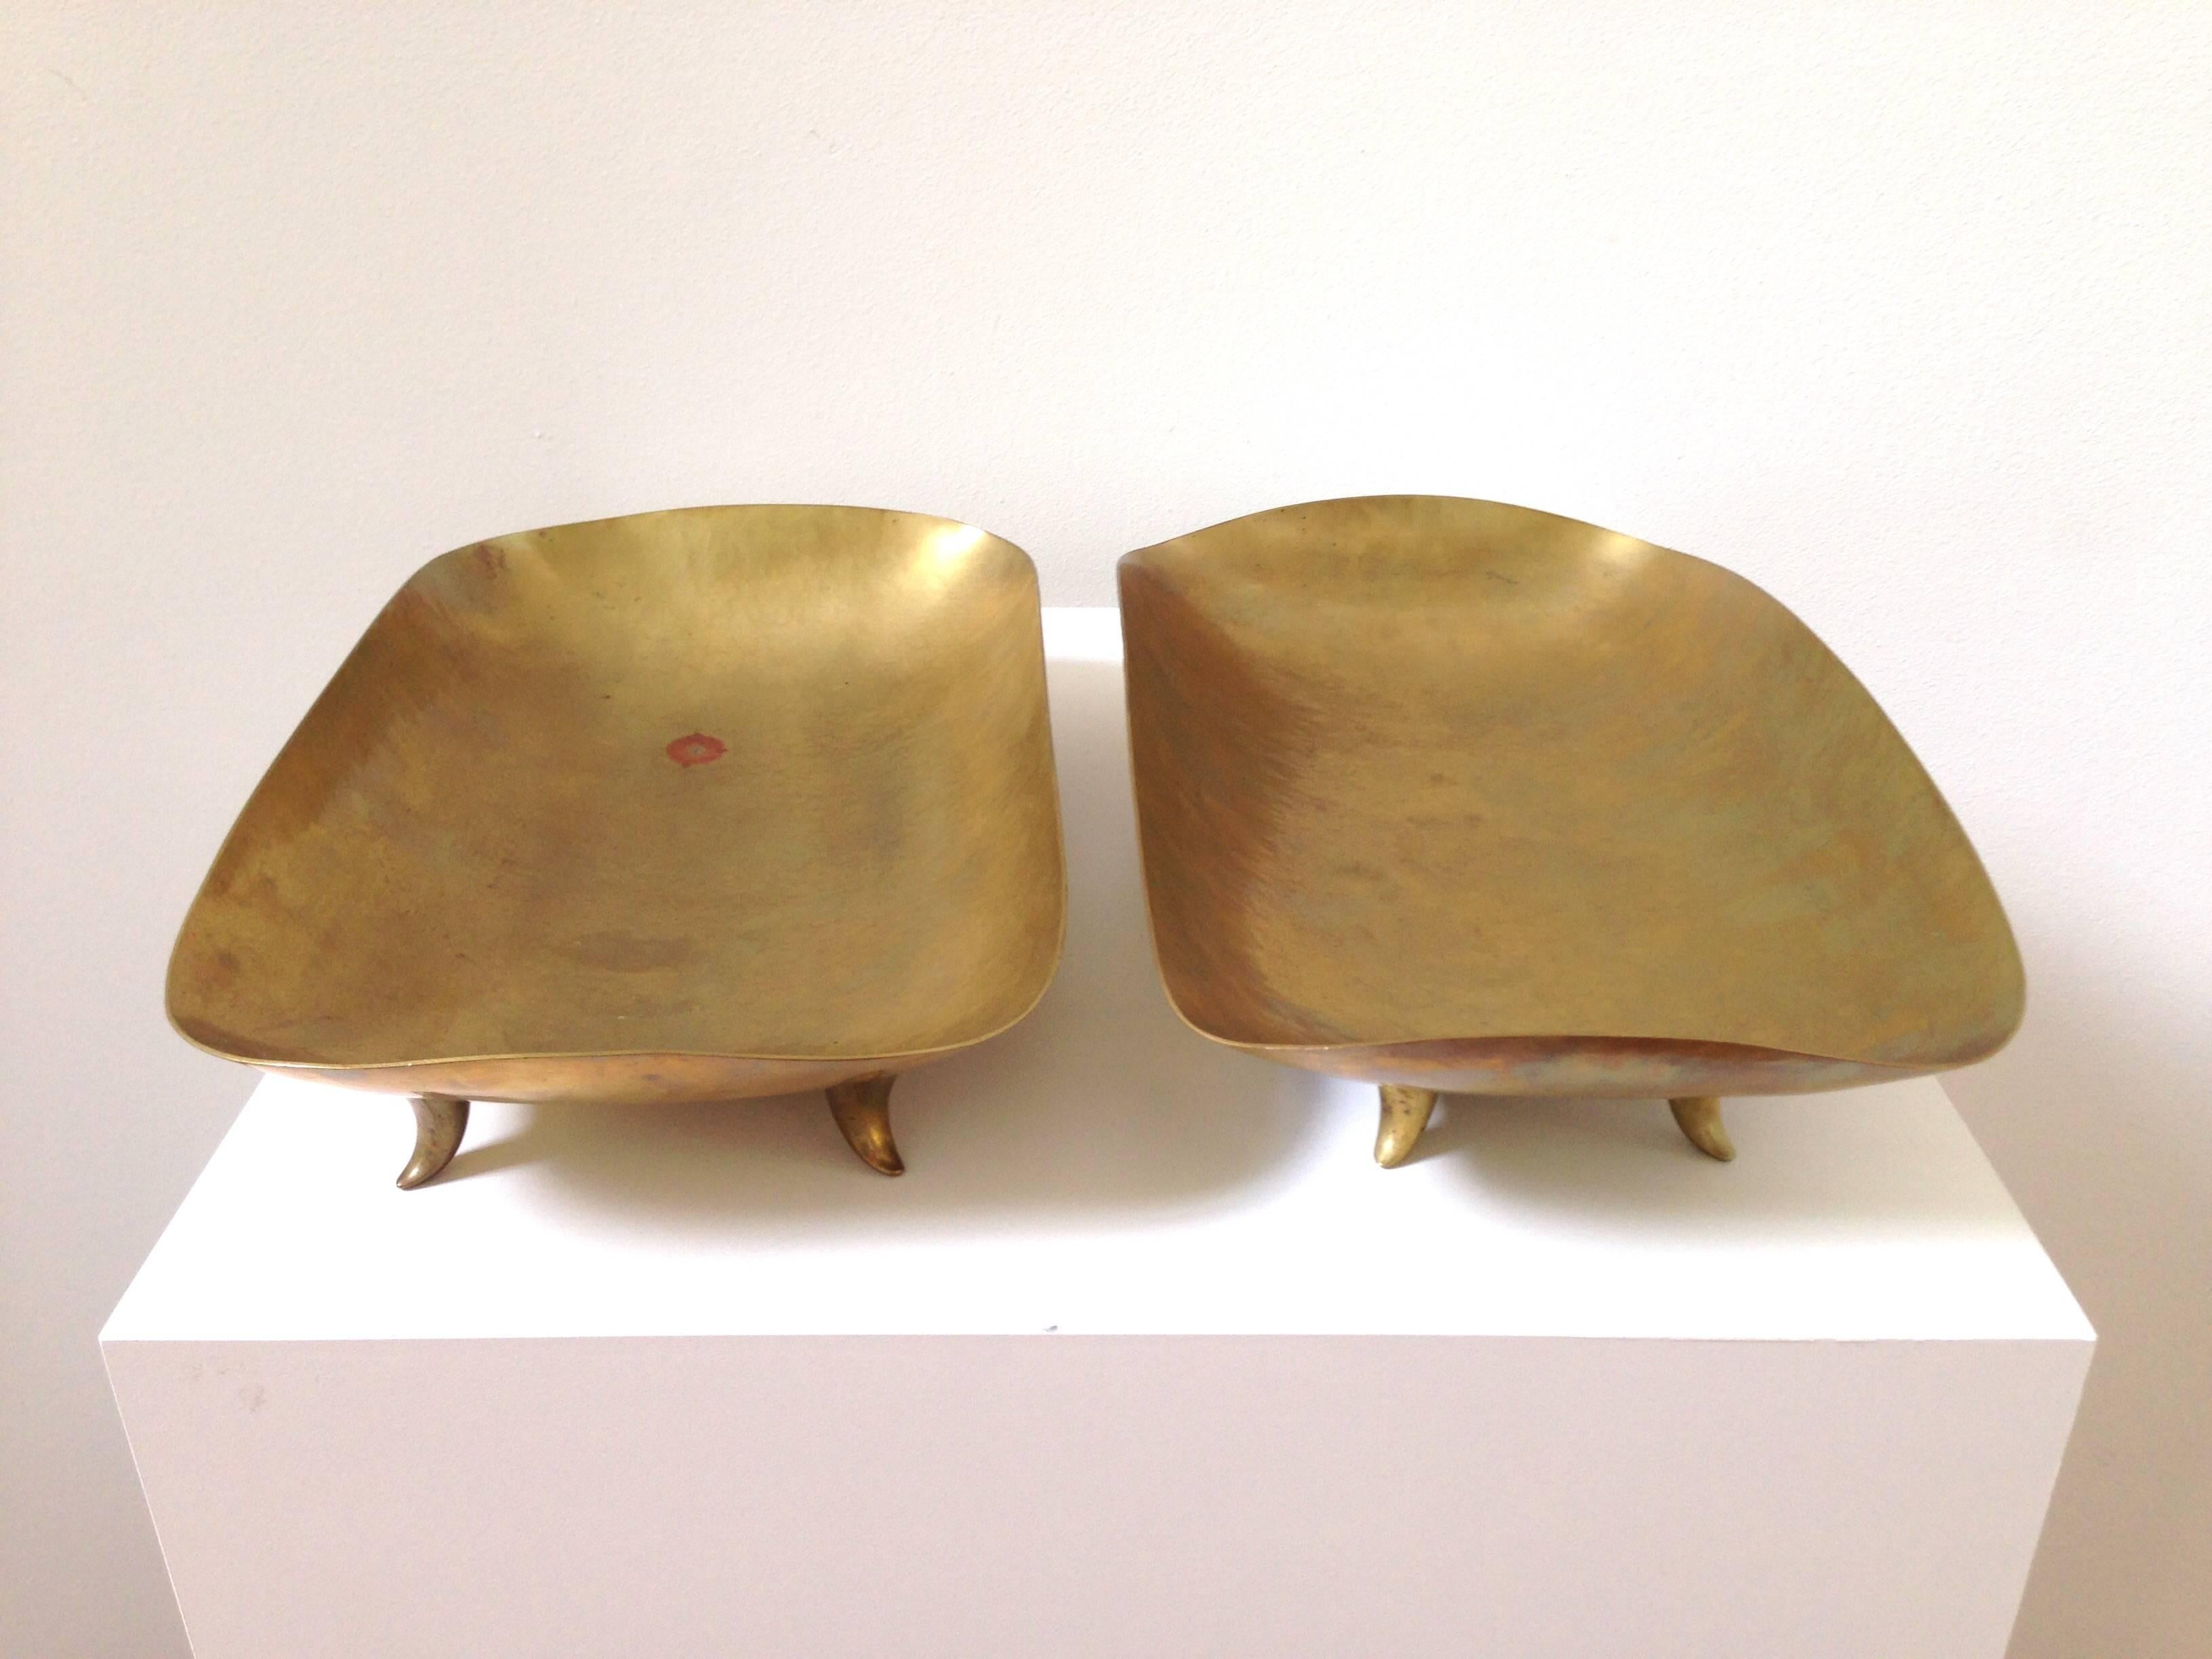 Pair of Sculptural Brass Trays by Karl Hagenauer for Wiener Werkstatte In Good Condition For Sale In Ashburn, VA